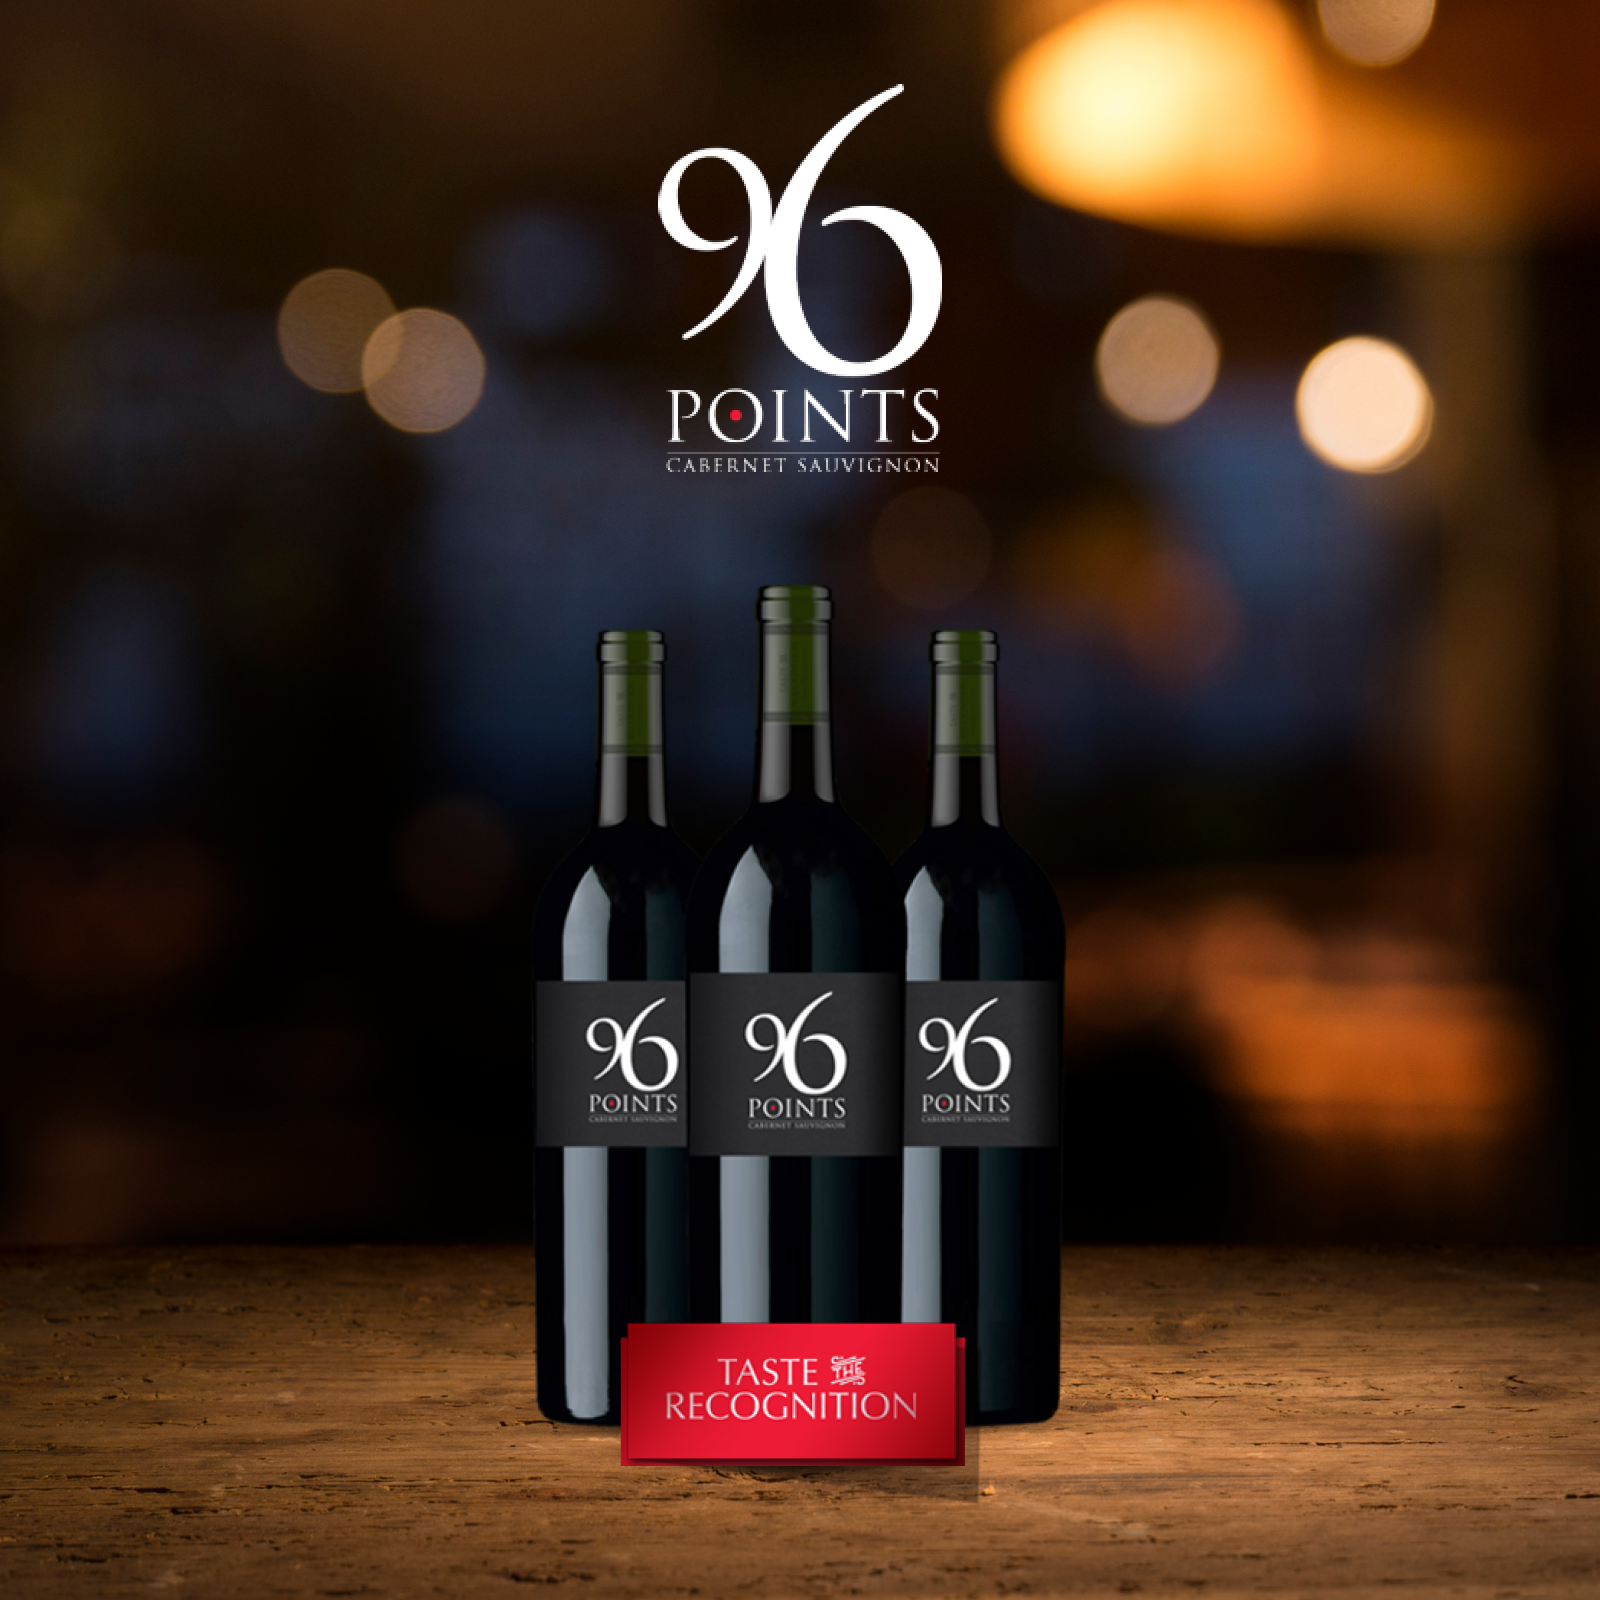 3 "96 Points" branded wine bottles